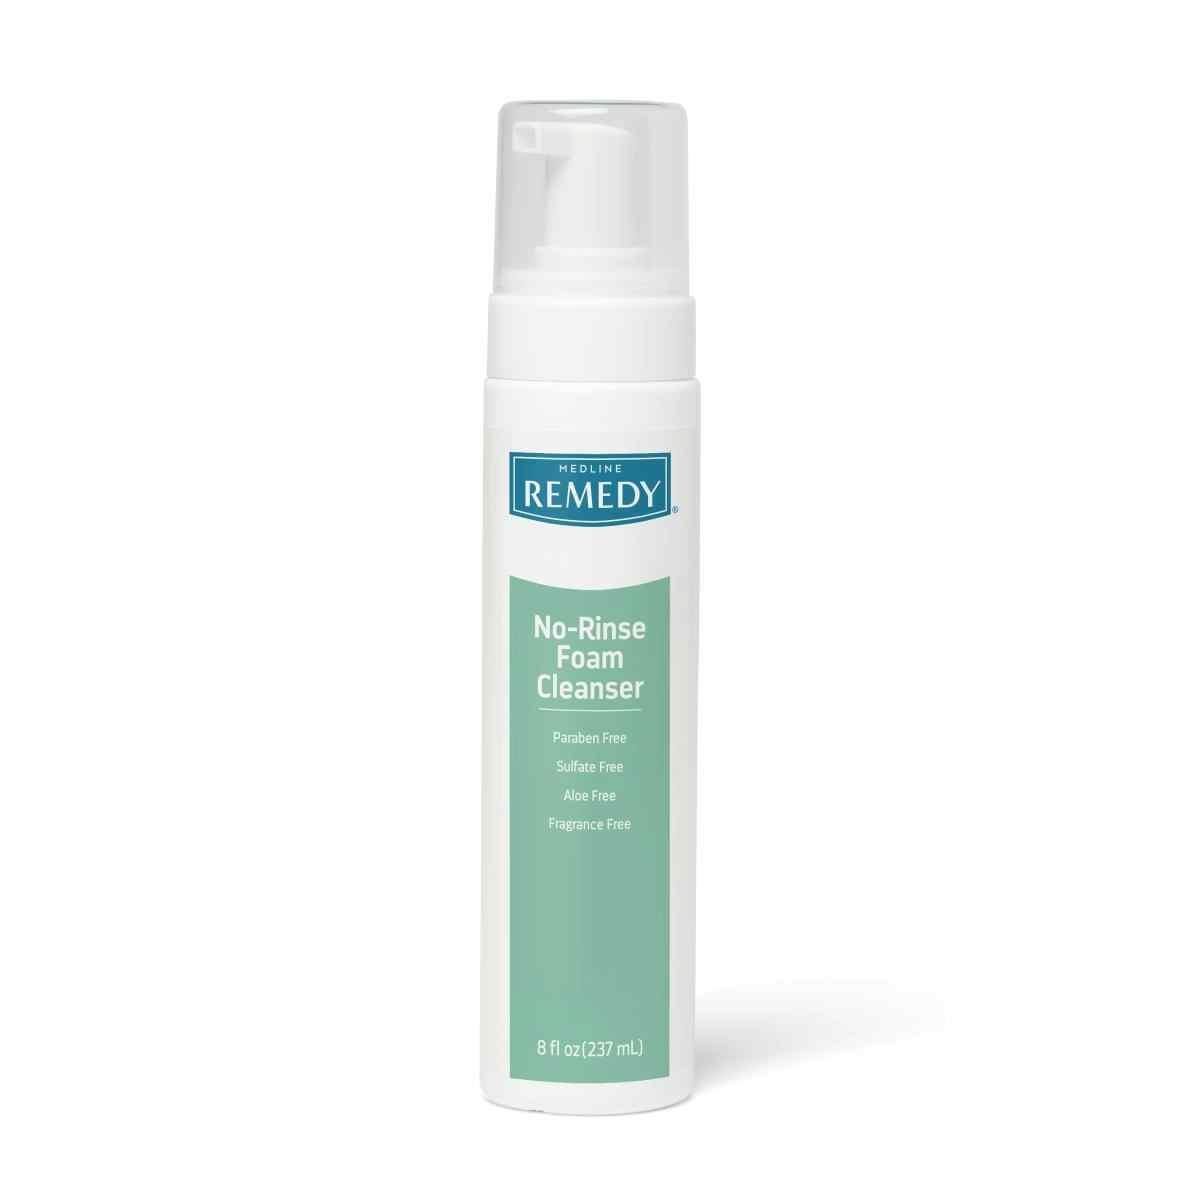 Medline Remedy No-Rinse Foam Cleanser, Pump Bottle, MSC09108H, 8 oz. - 1 Each